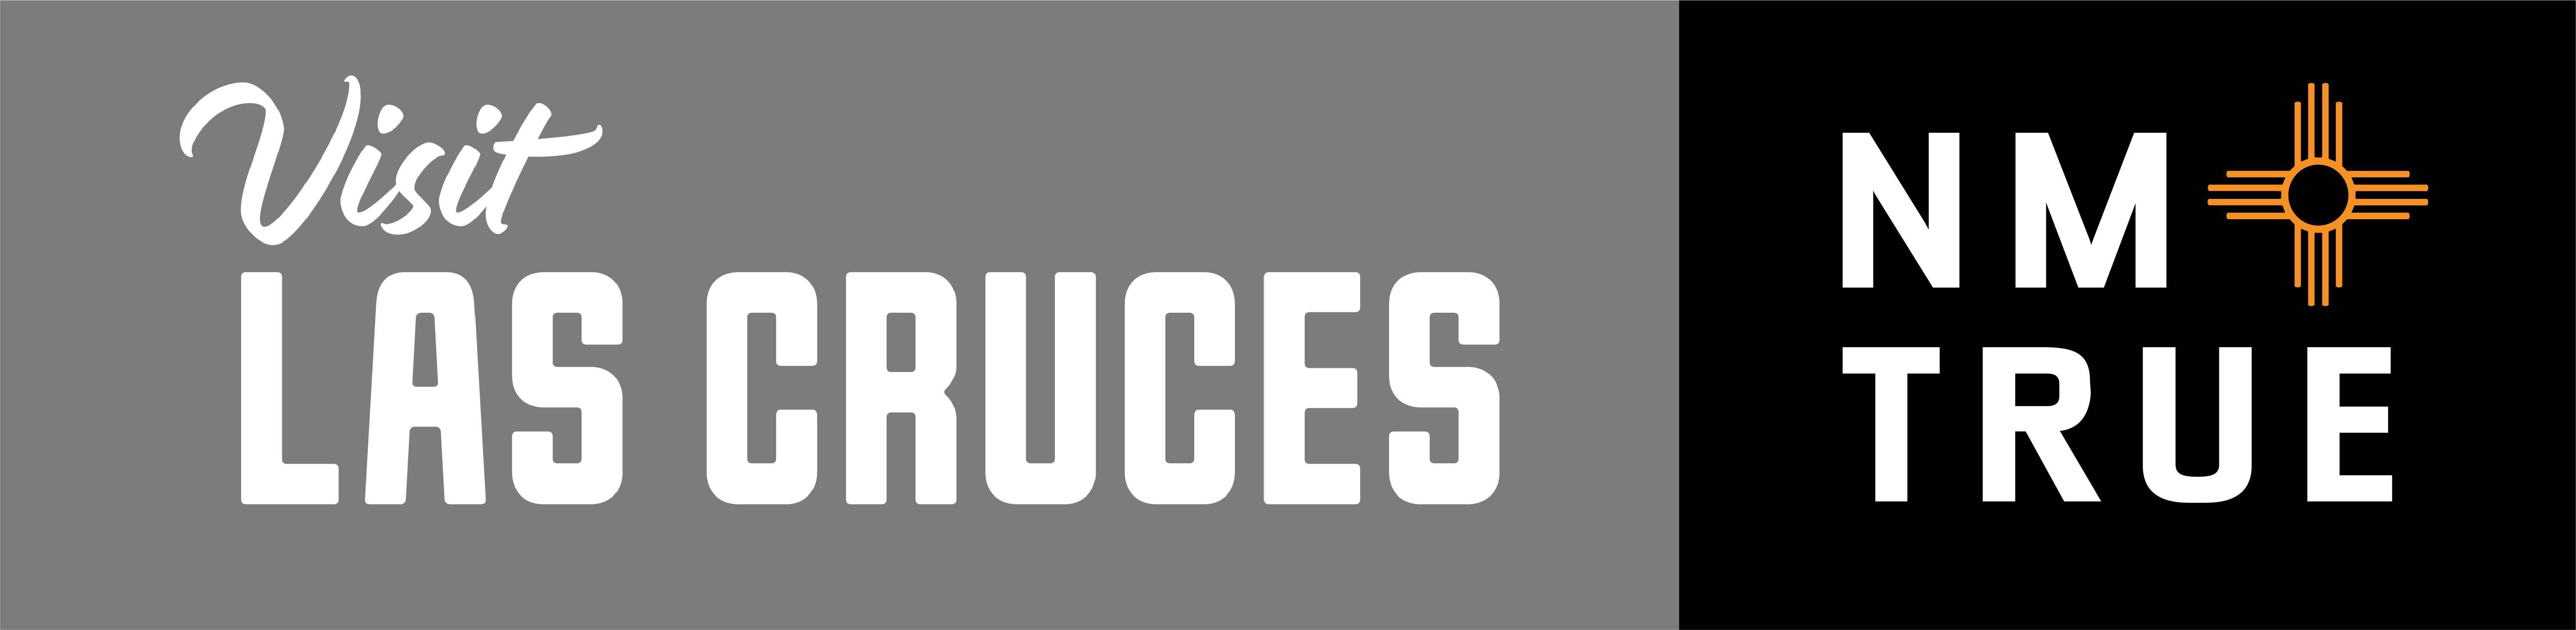 Las Cruces logo